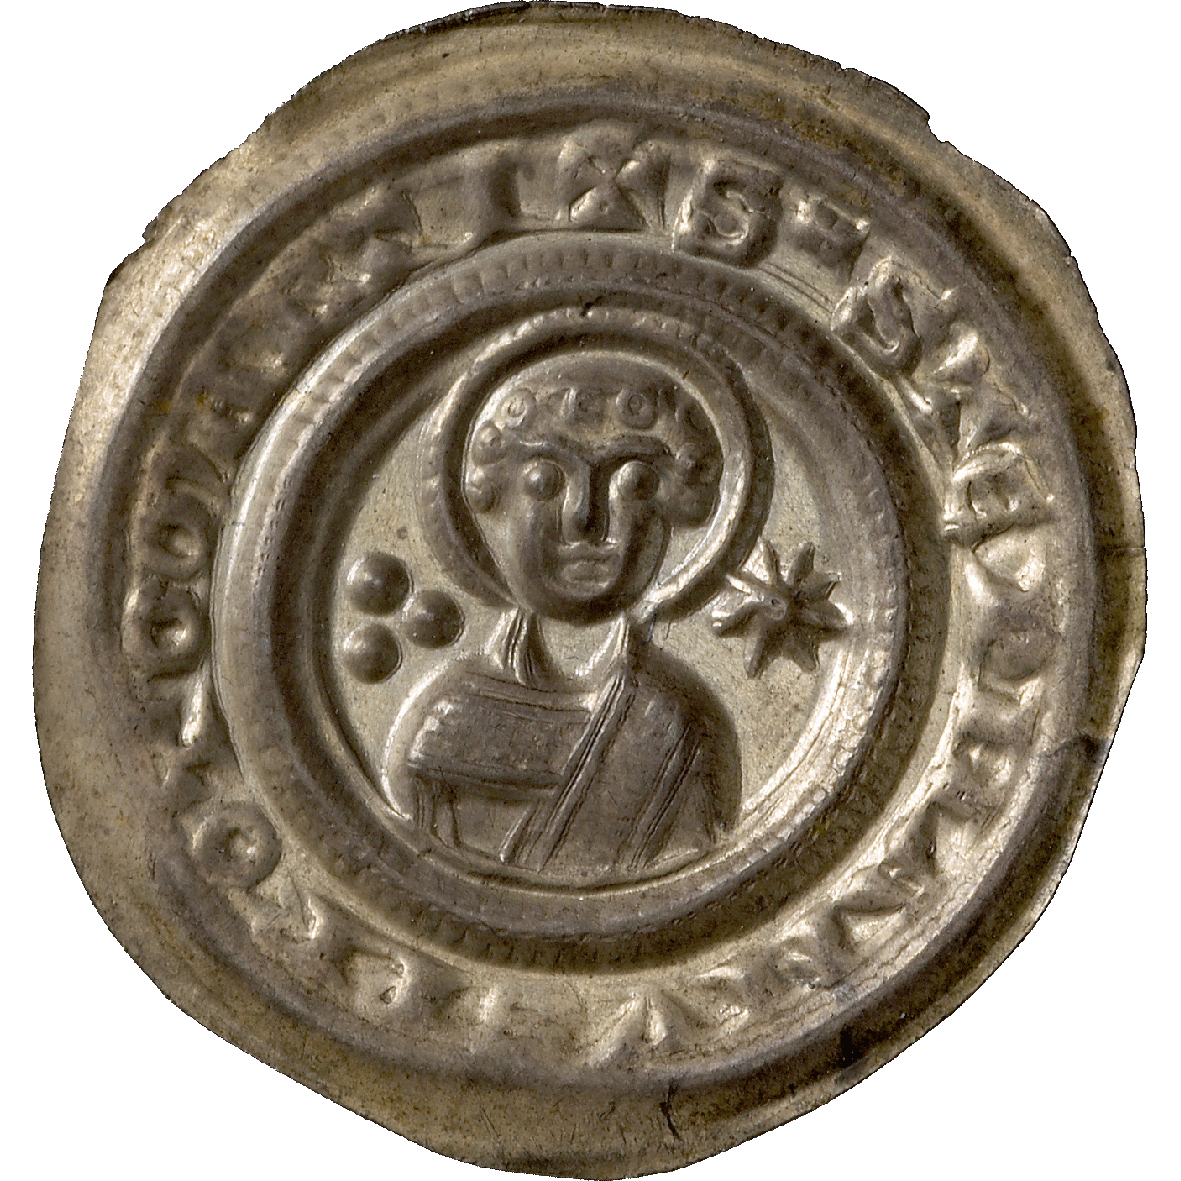 Holy Roman Empire, Bishopric of Halberstadt, Gero of Schermbke, Bracteate (obverse)